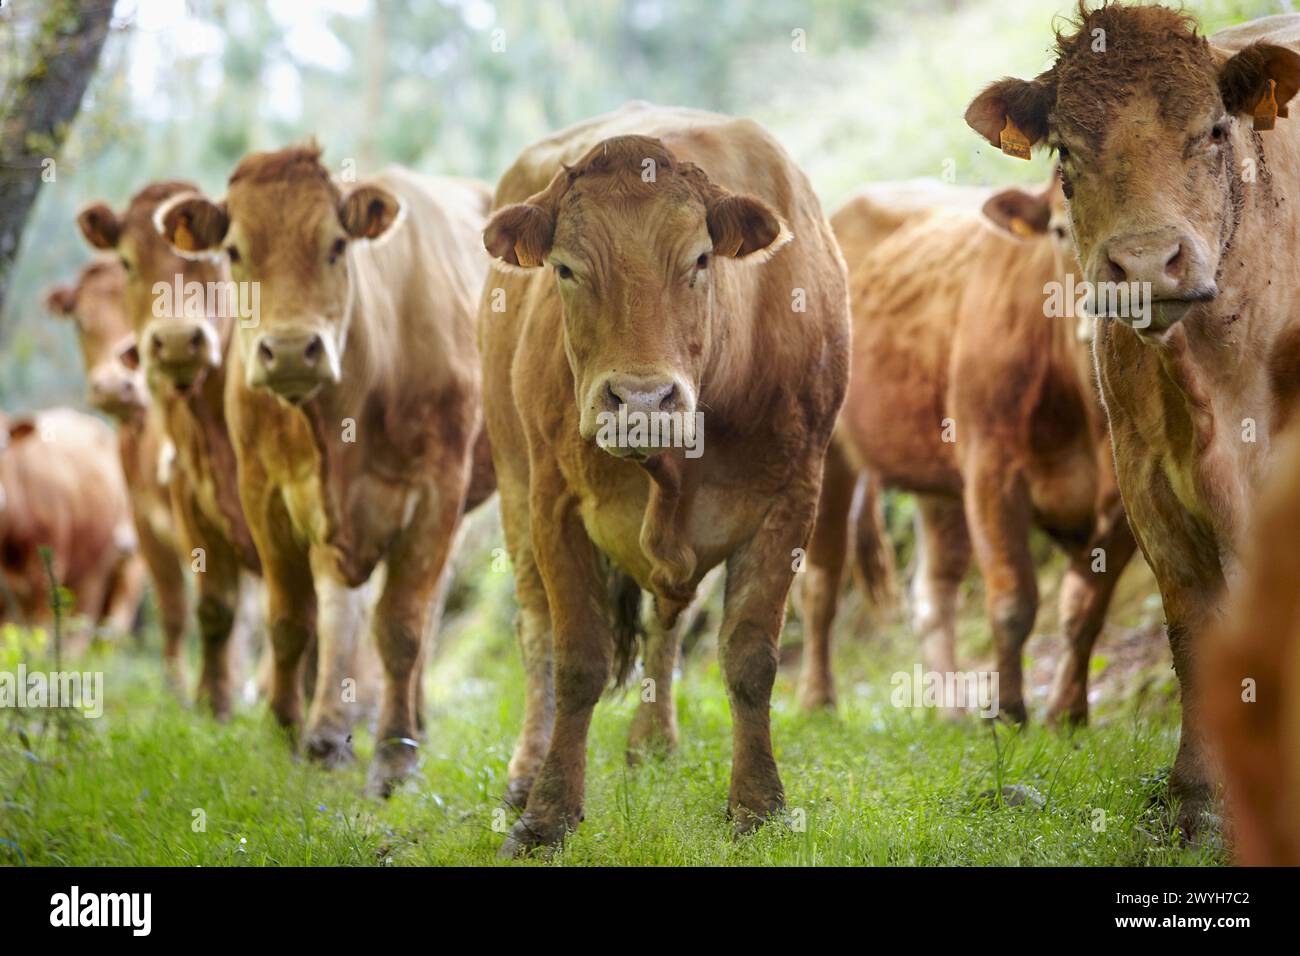 Limousin cows, cattle, Beizama, Guipuzcoa, Basque Country, Spain. Stock Photo